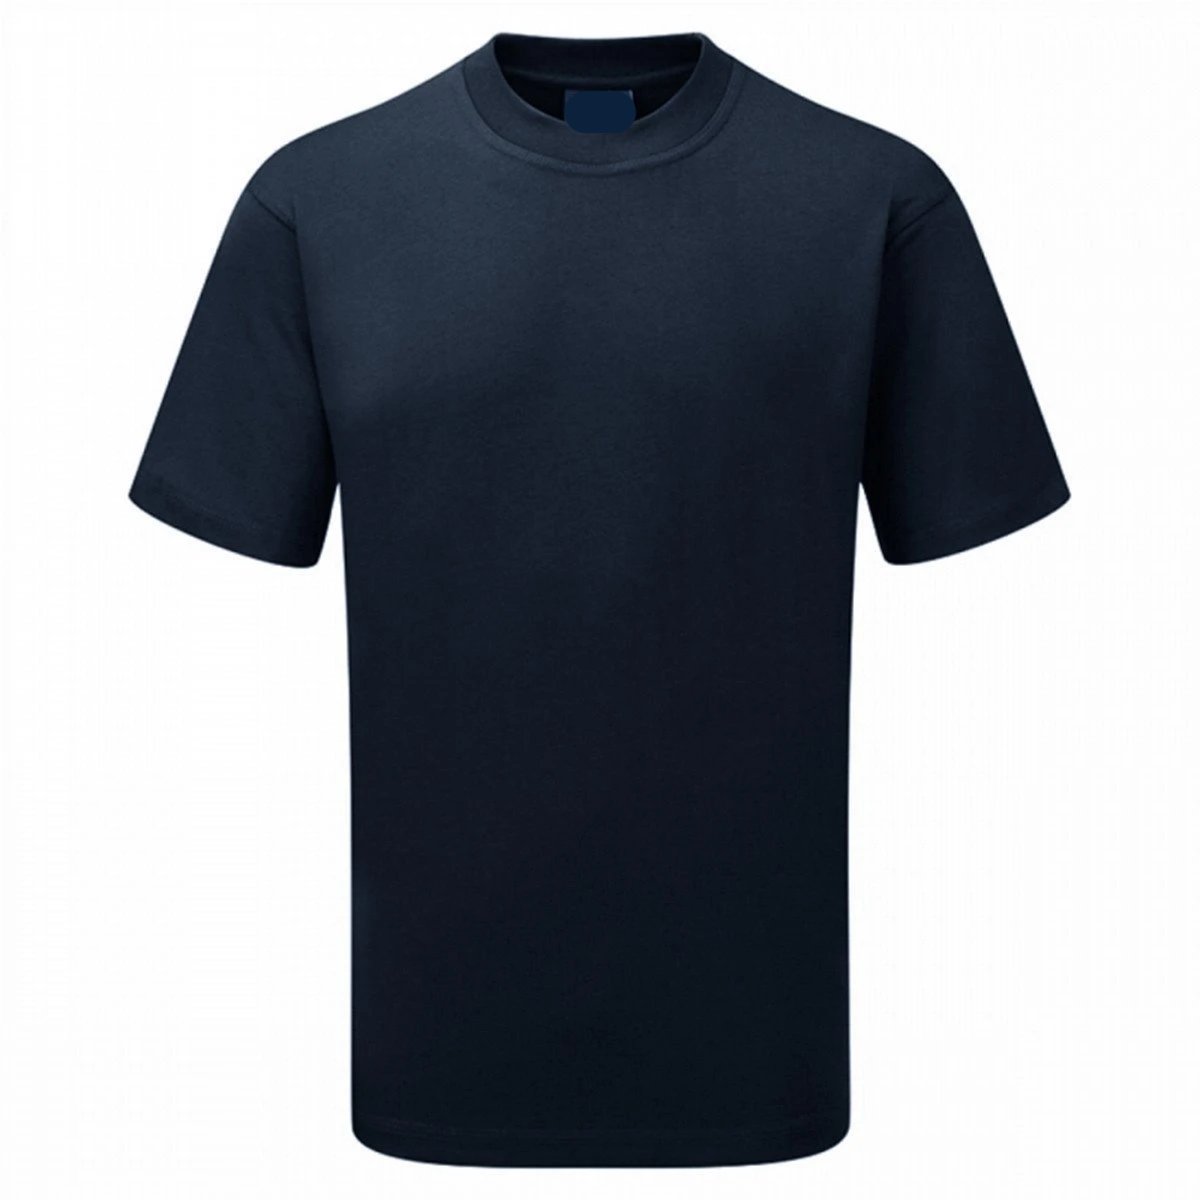 Jackson Solid Color Short Sleeve Tee Shirt Men's Tee Shirt Image Navy S 